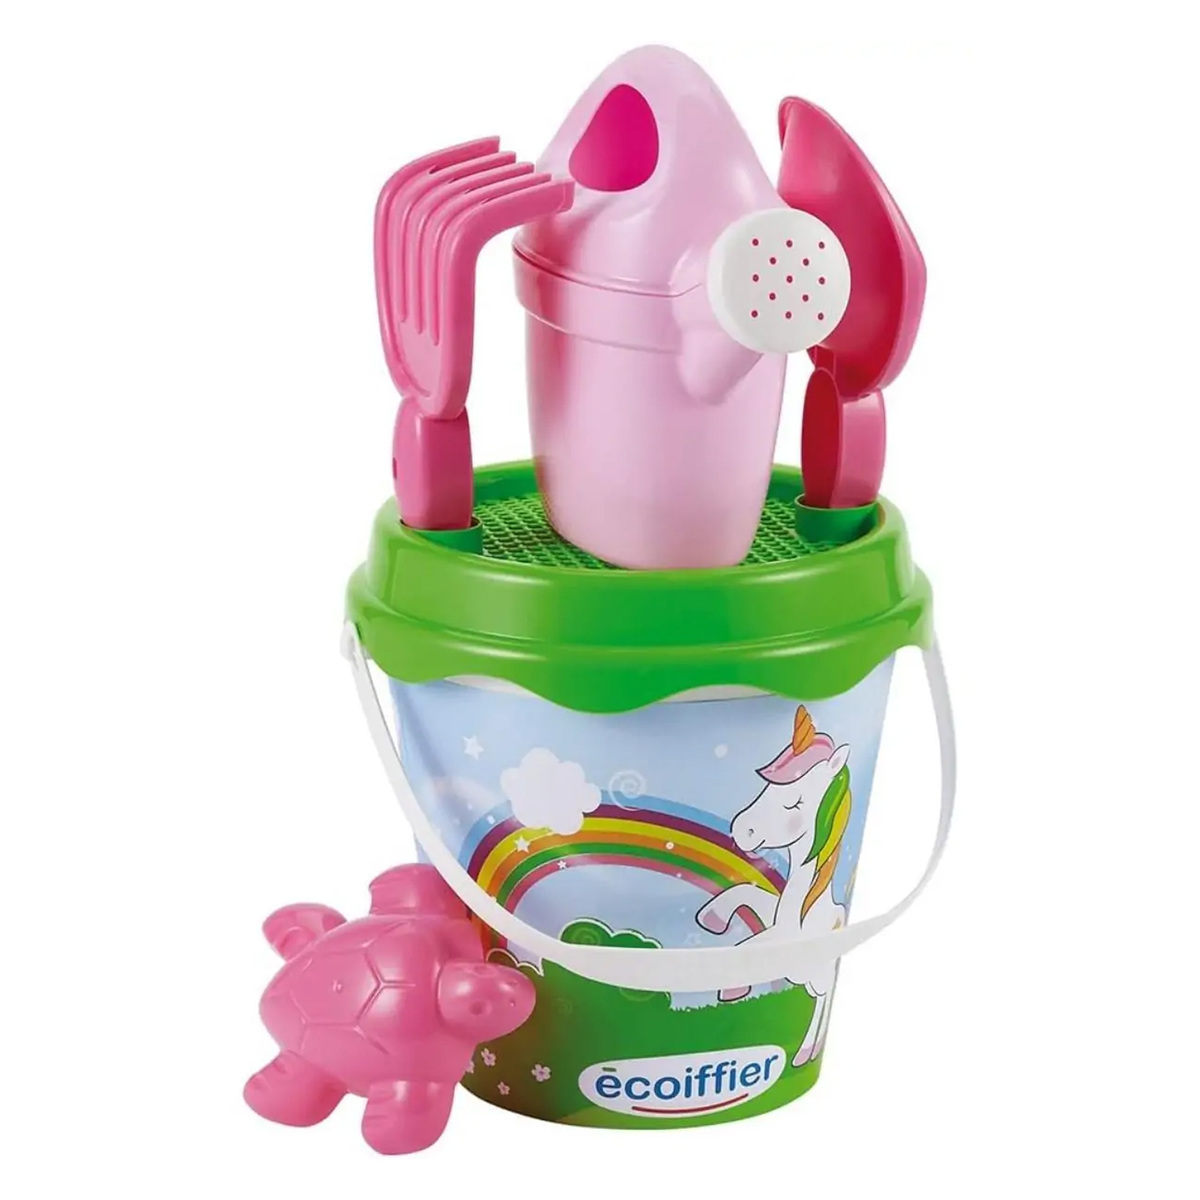 Ecoiffier 17 cm Unicorn IML Beach Bucket with Accessories, Assorted, 7600000687